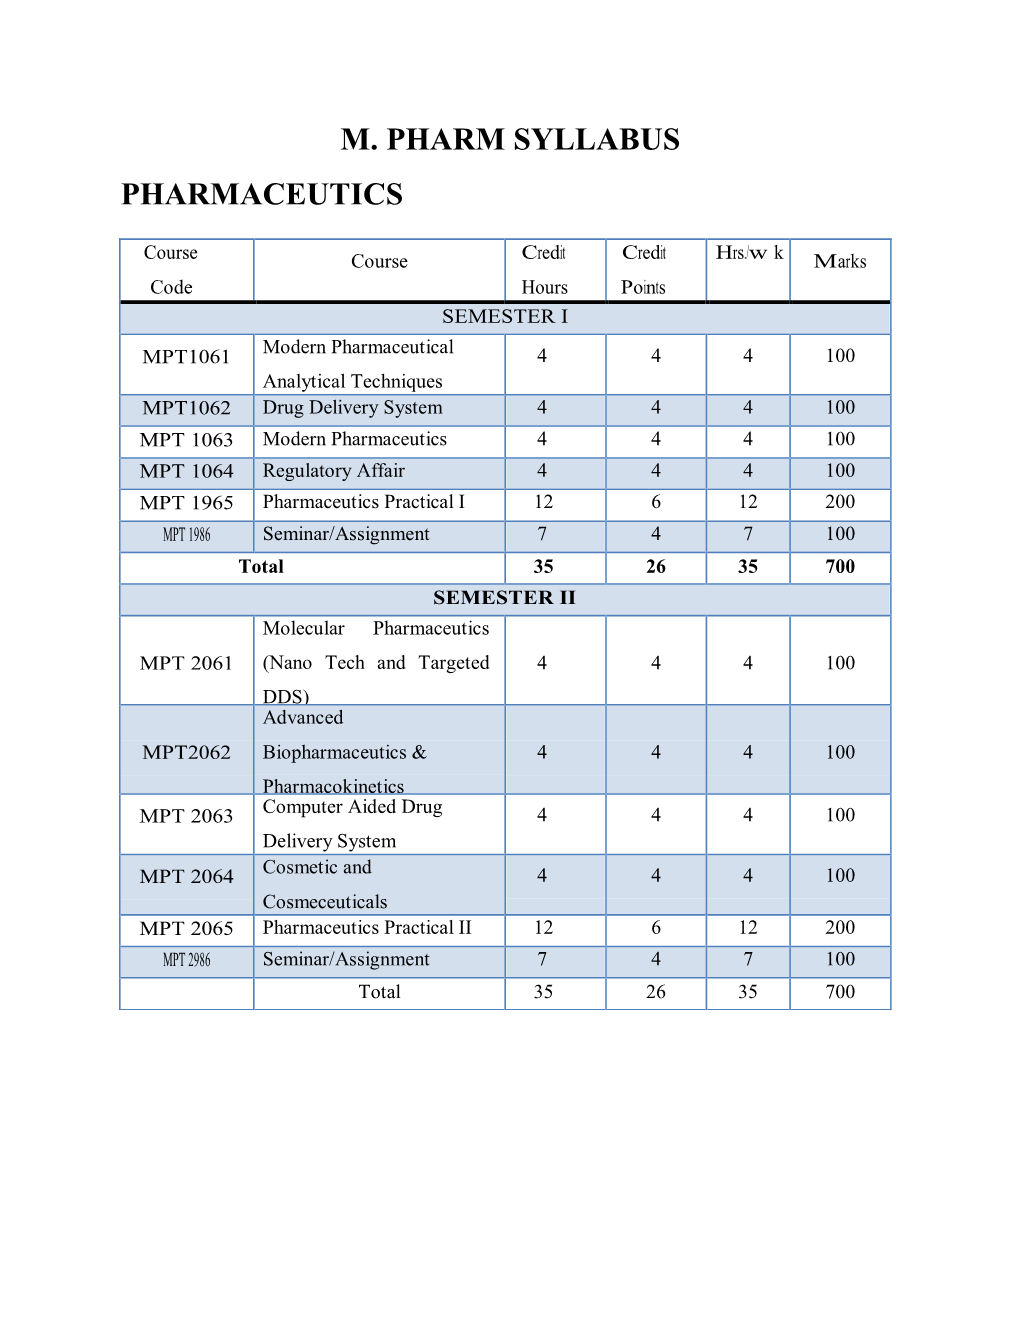 M. Pharm Syllabus Pharmaceutics